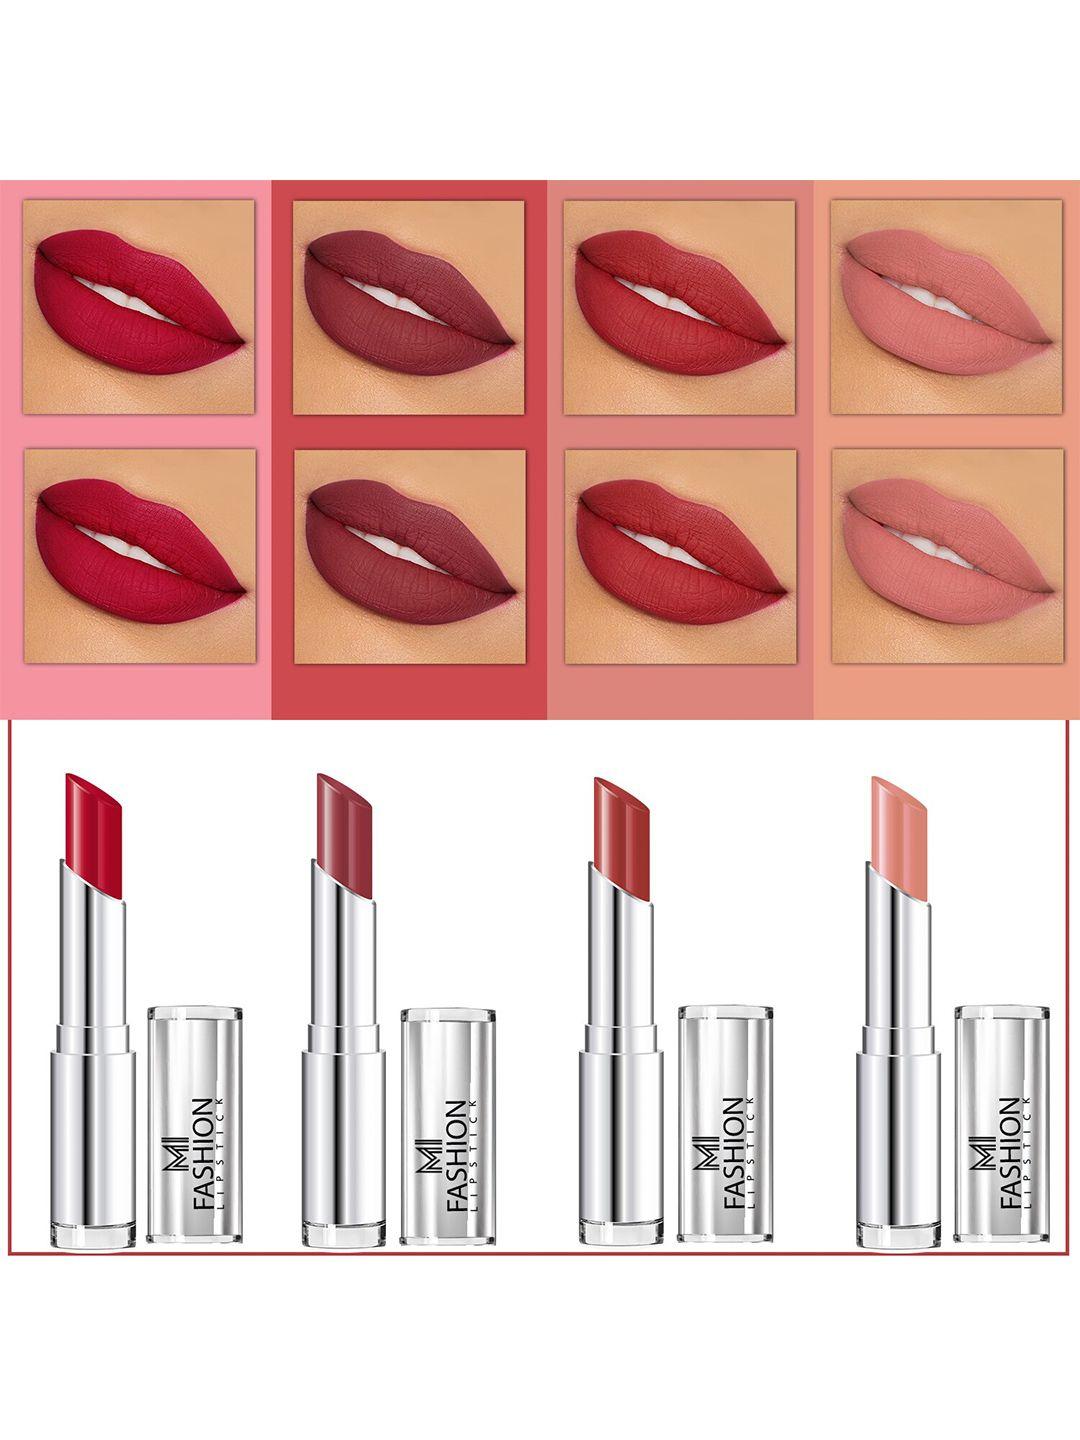 mi fashion set of 4 creme matte weightless long-lasting lipstick 3.5g each - purple + brown + brownish red + nude